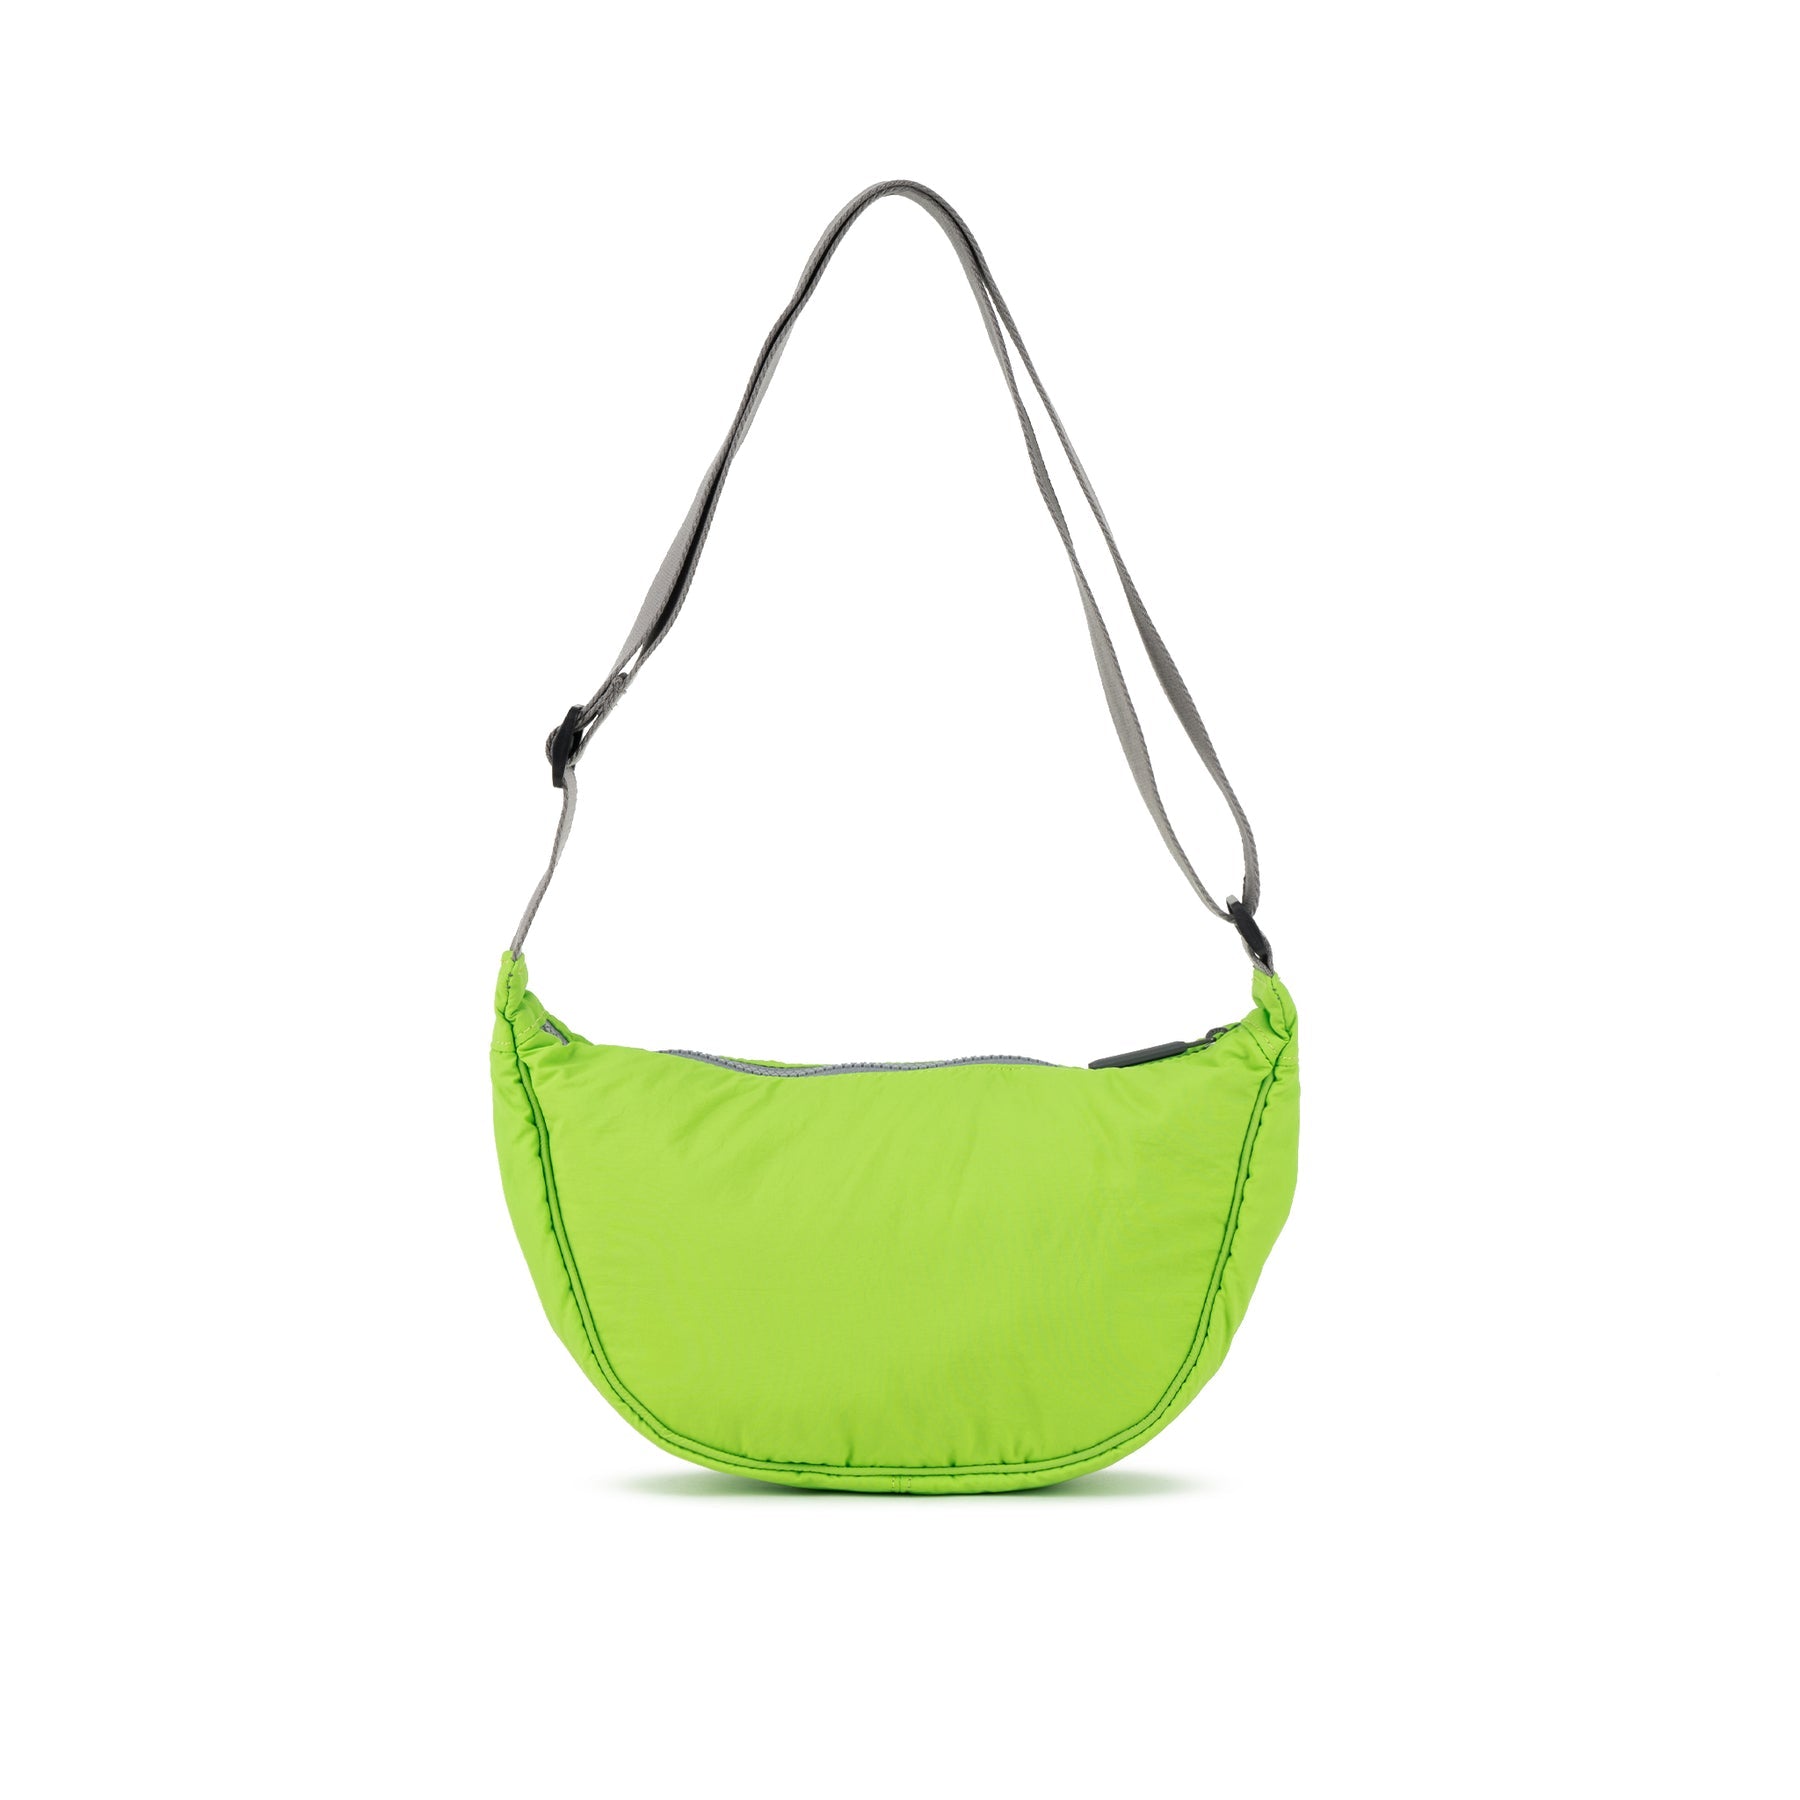 ROKA Farringdon Lime Recycled Taslon Bag - OS